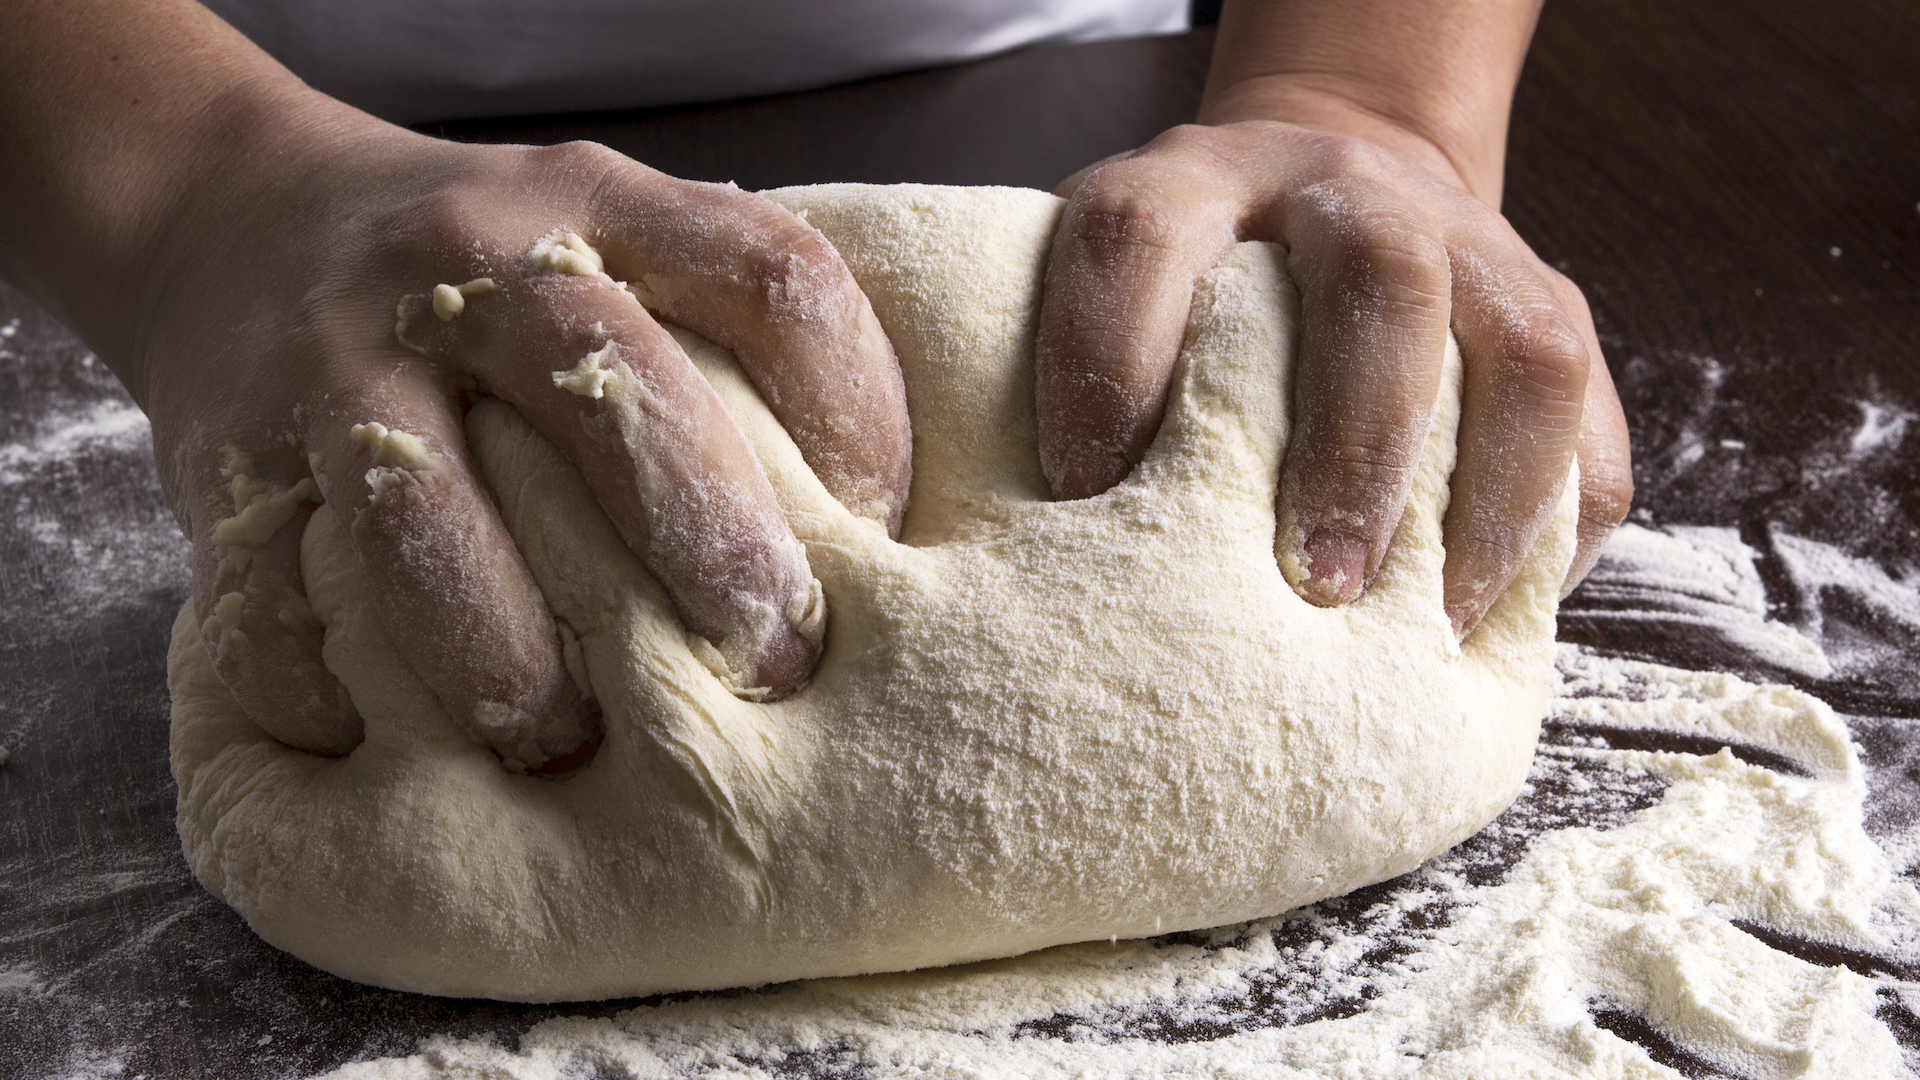 Making dough at a bakery